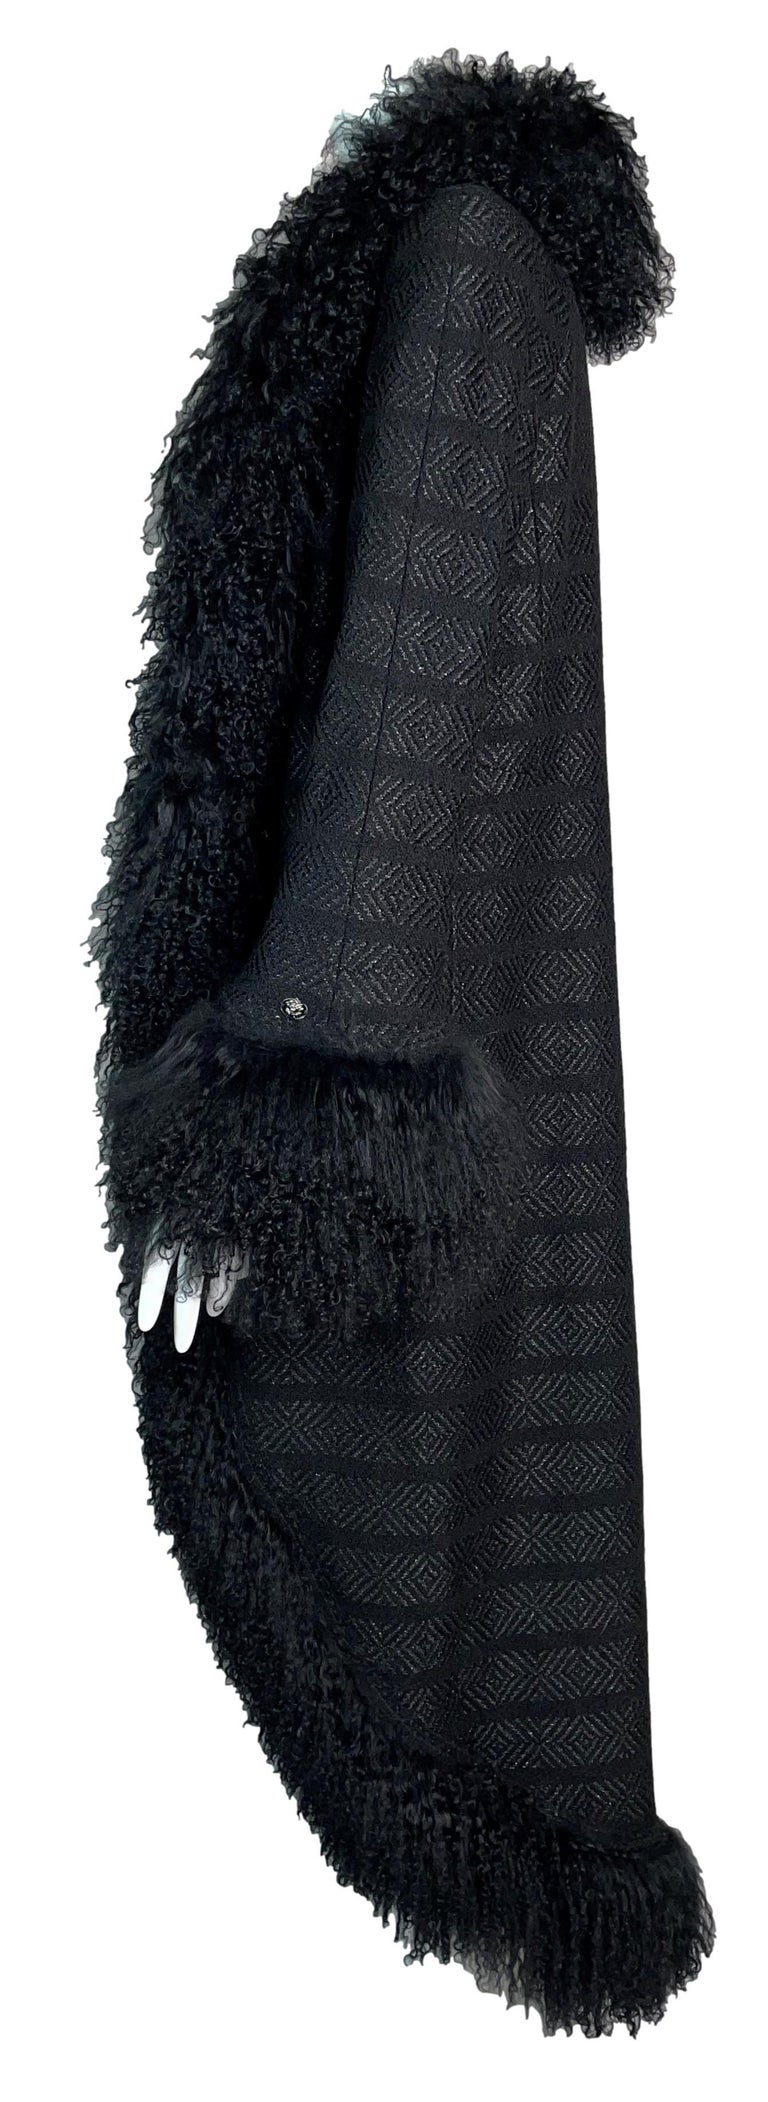 F/W 2008 Chanel Runway Black Metallic Tweed Shearling Coat Jacket In Good Condition For Sale In Yukon, OK